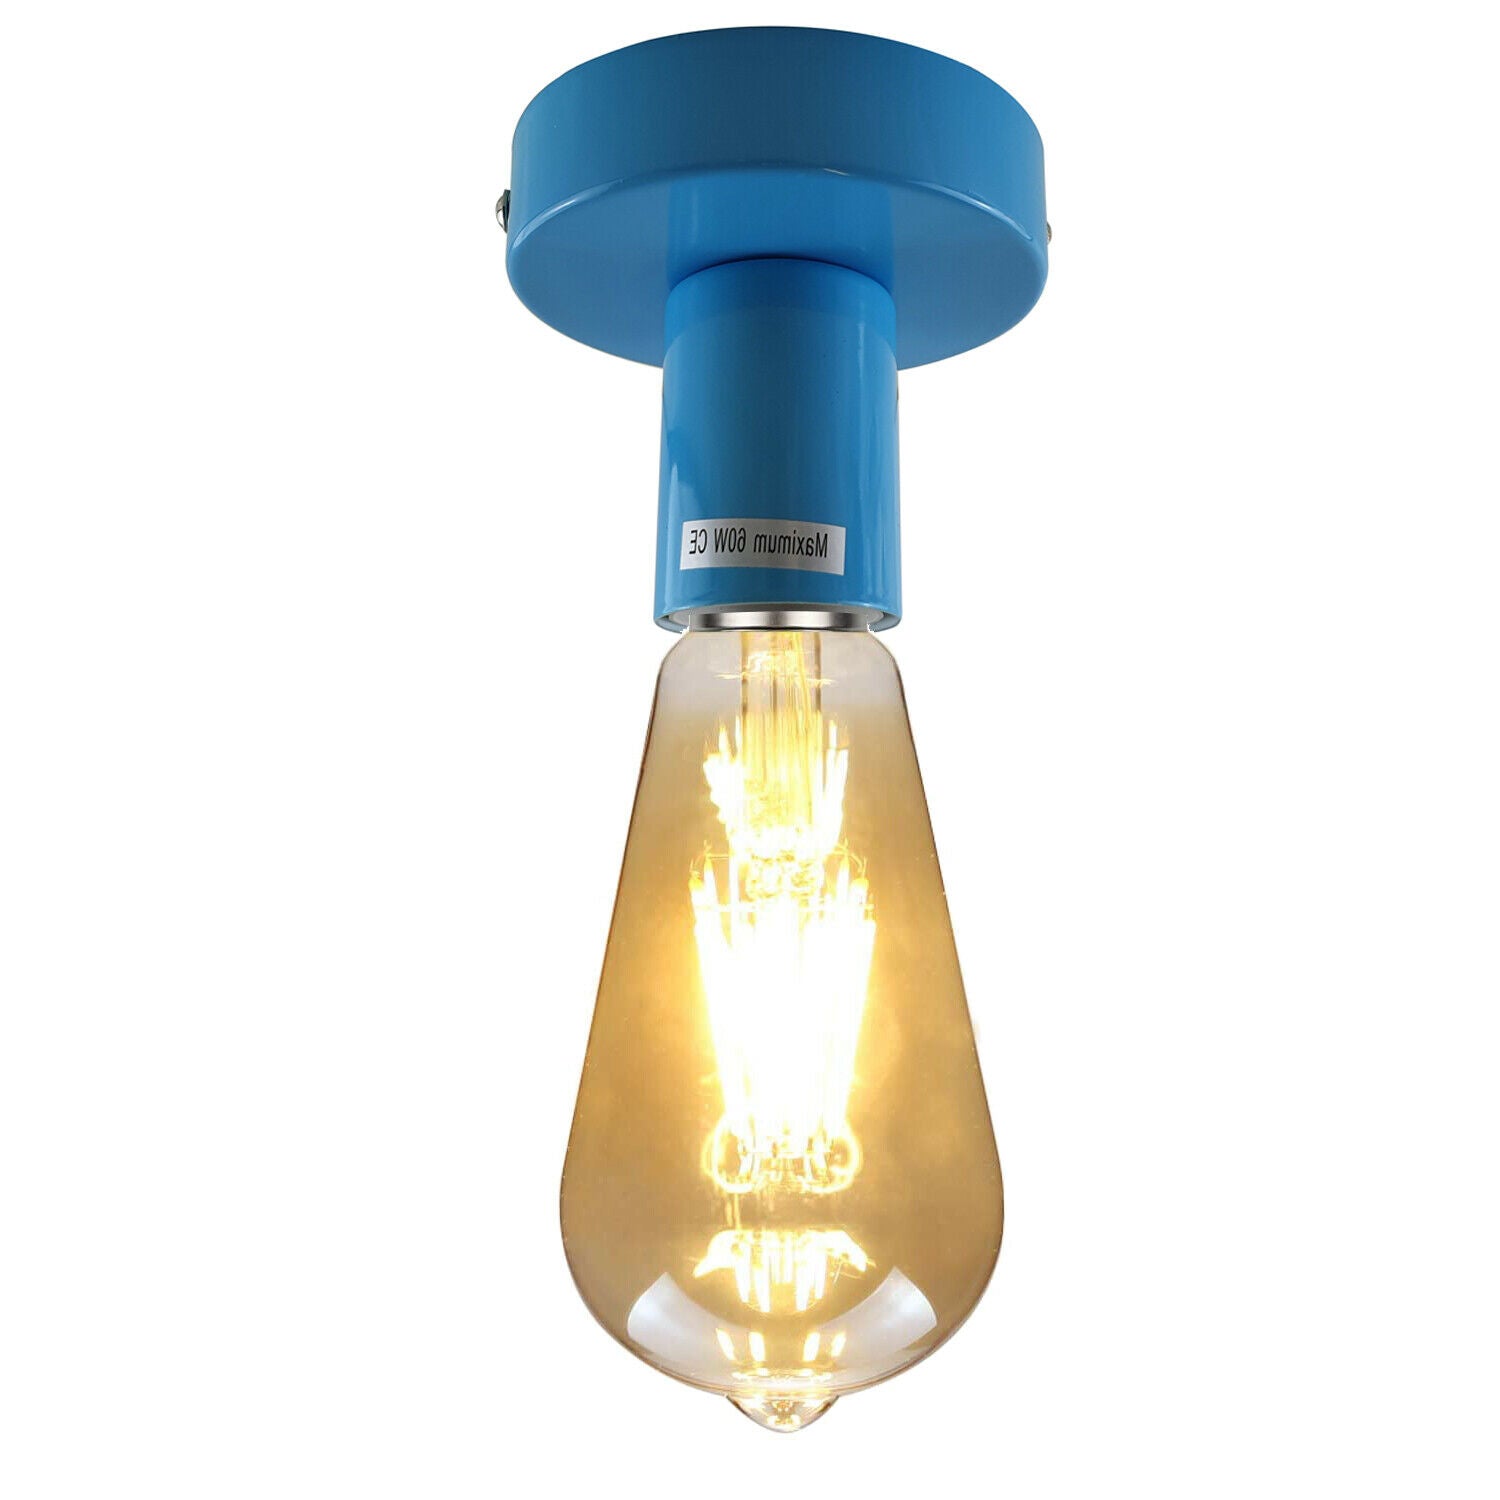 LEDSone industrial vintage Blue Flush Mount Ceiling Light Fitting~1689 - LEDSone UK Ltd